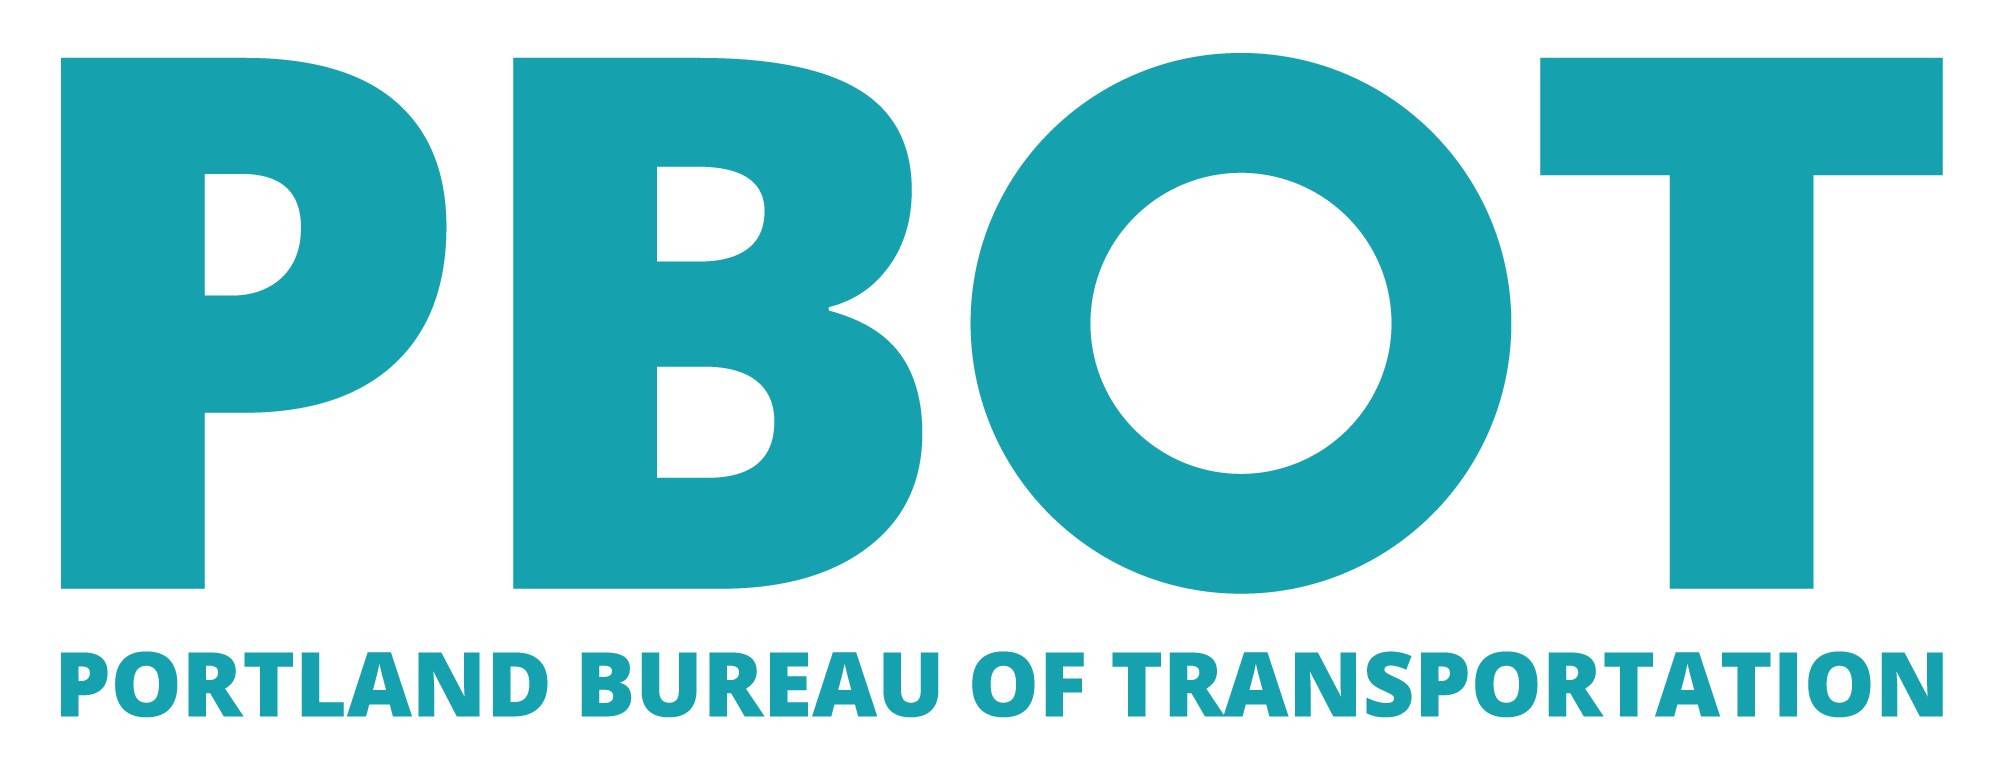 PBOT - Portland Bureau of Transportation